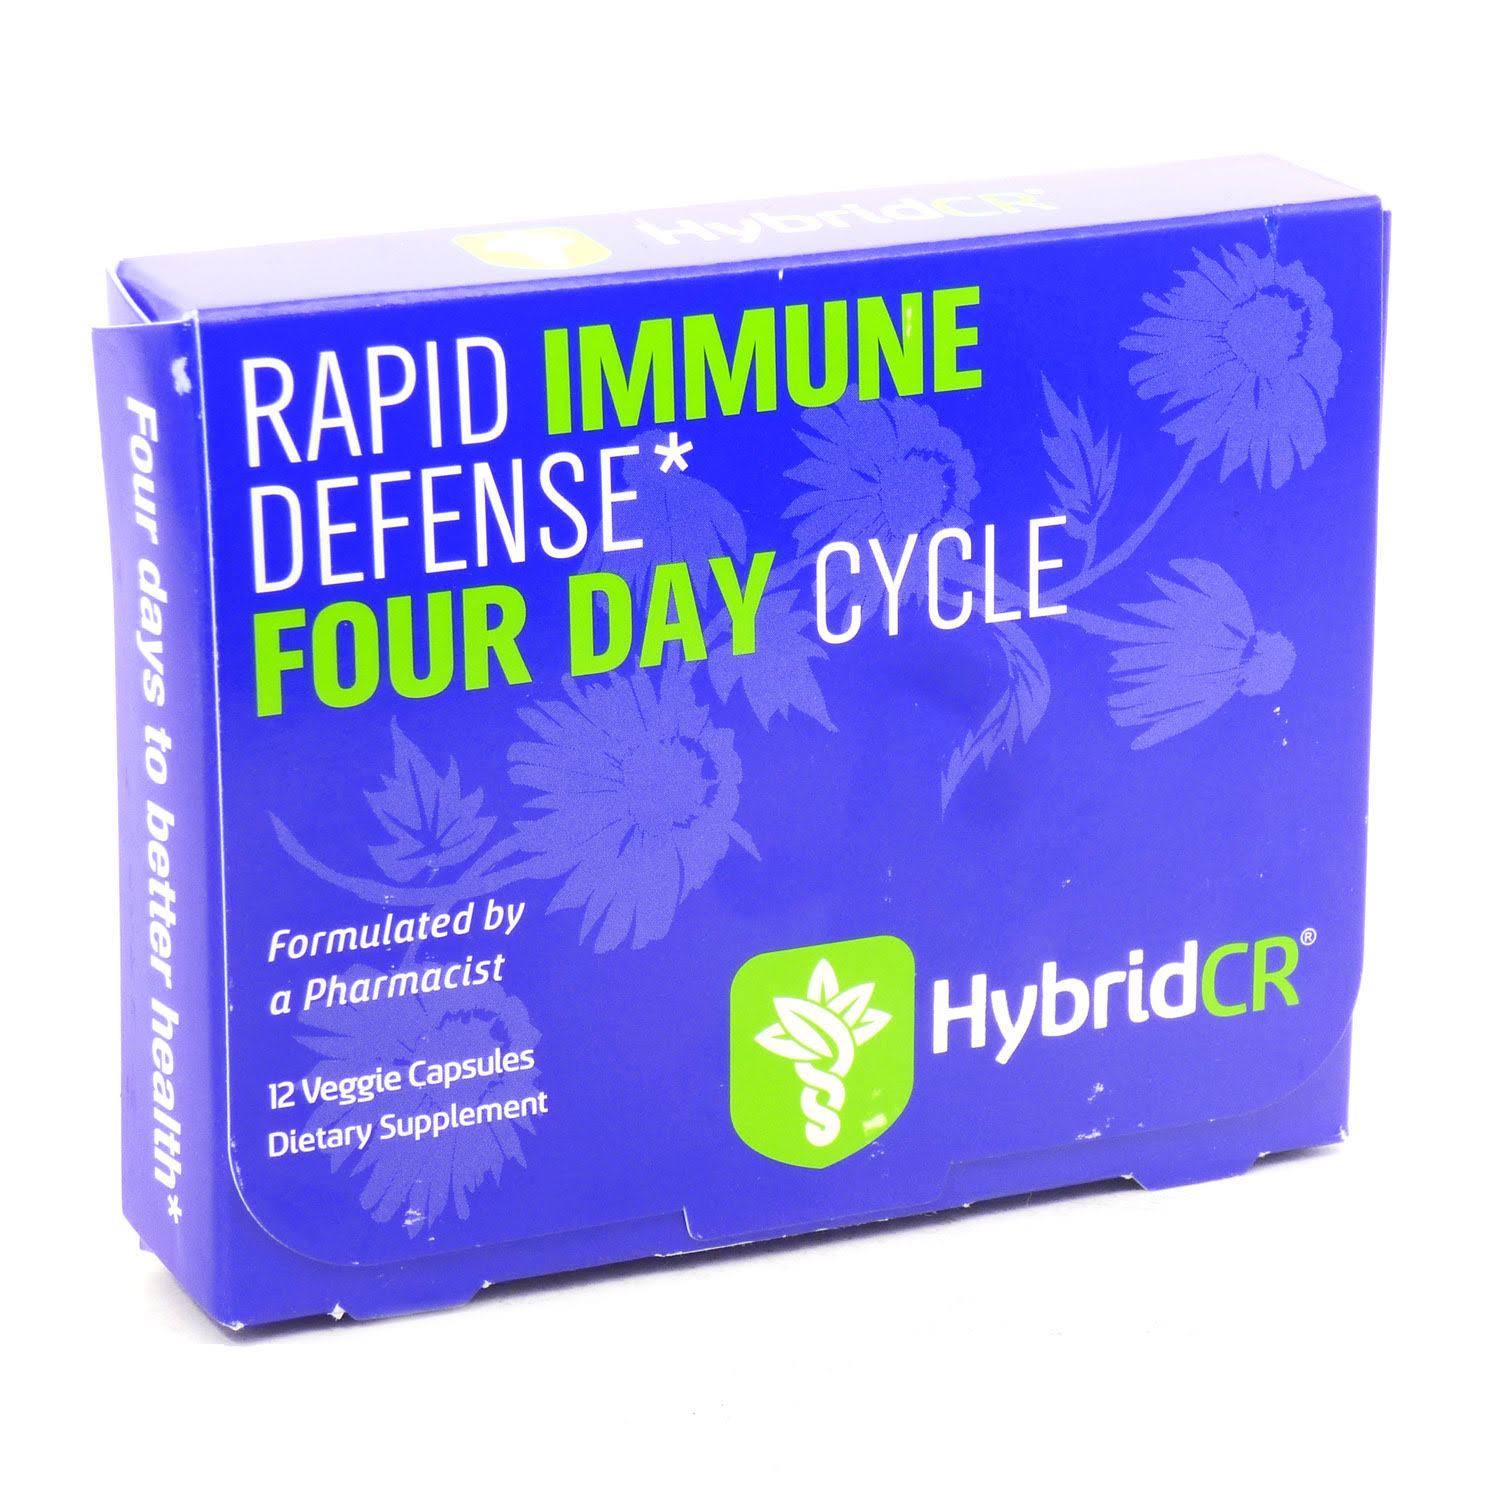 Hybridcr Rapid Immune Defense Four Day Cycle - 12 Veggie Capsules